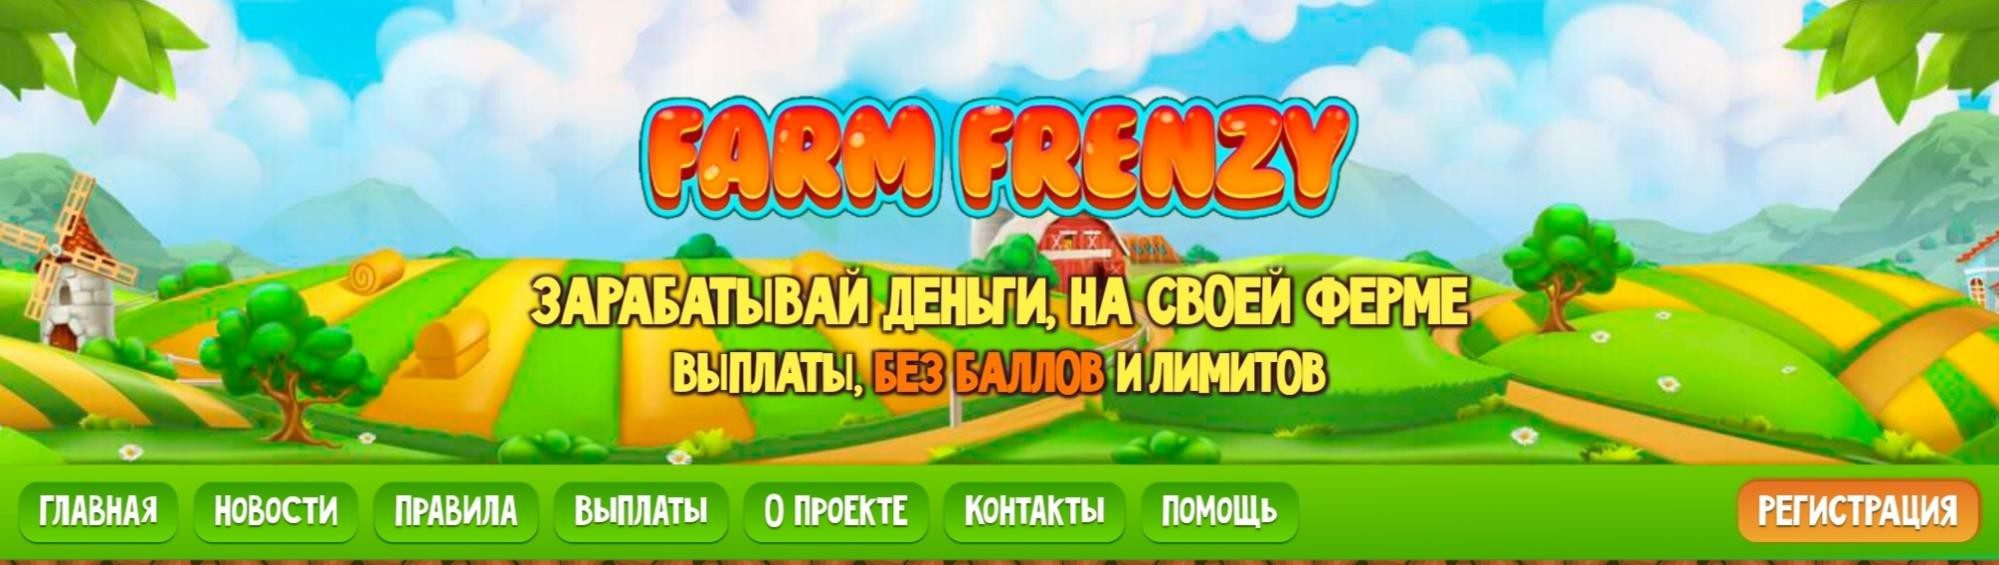 Farm-Frenzy проект обзор